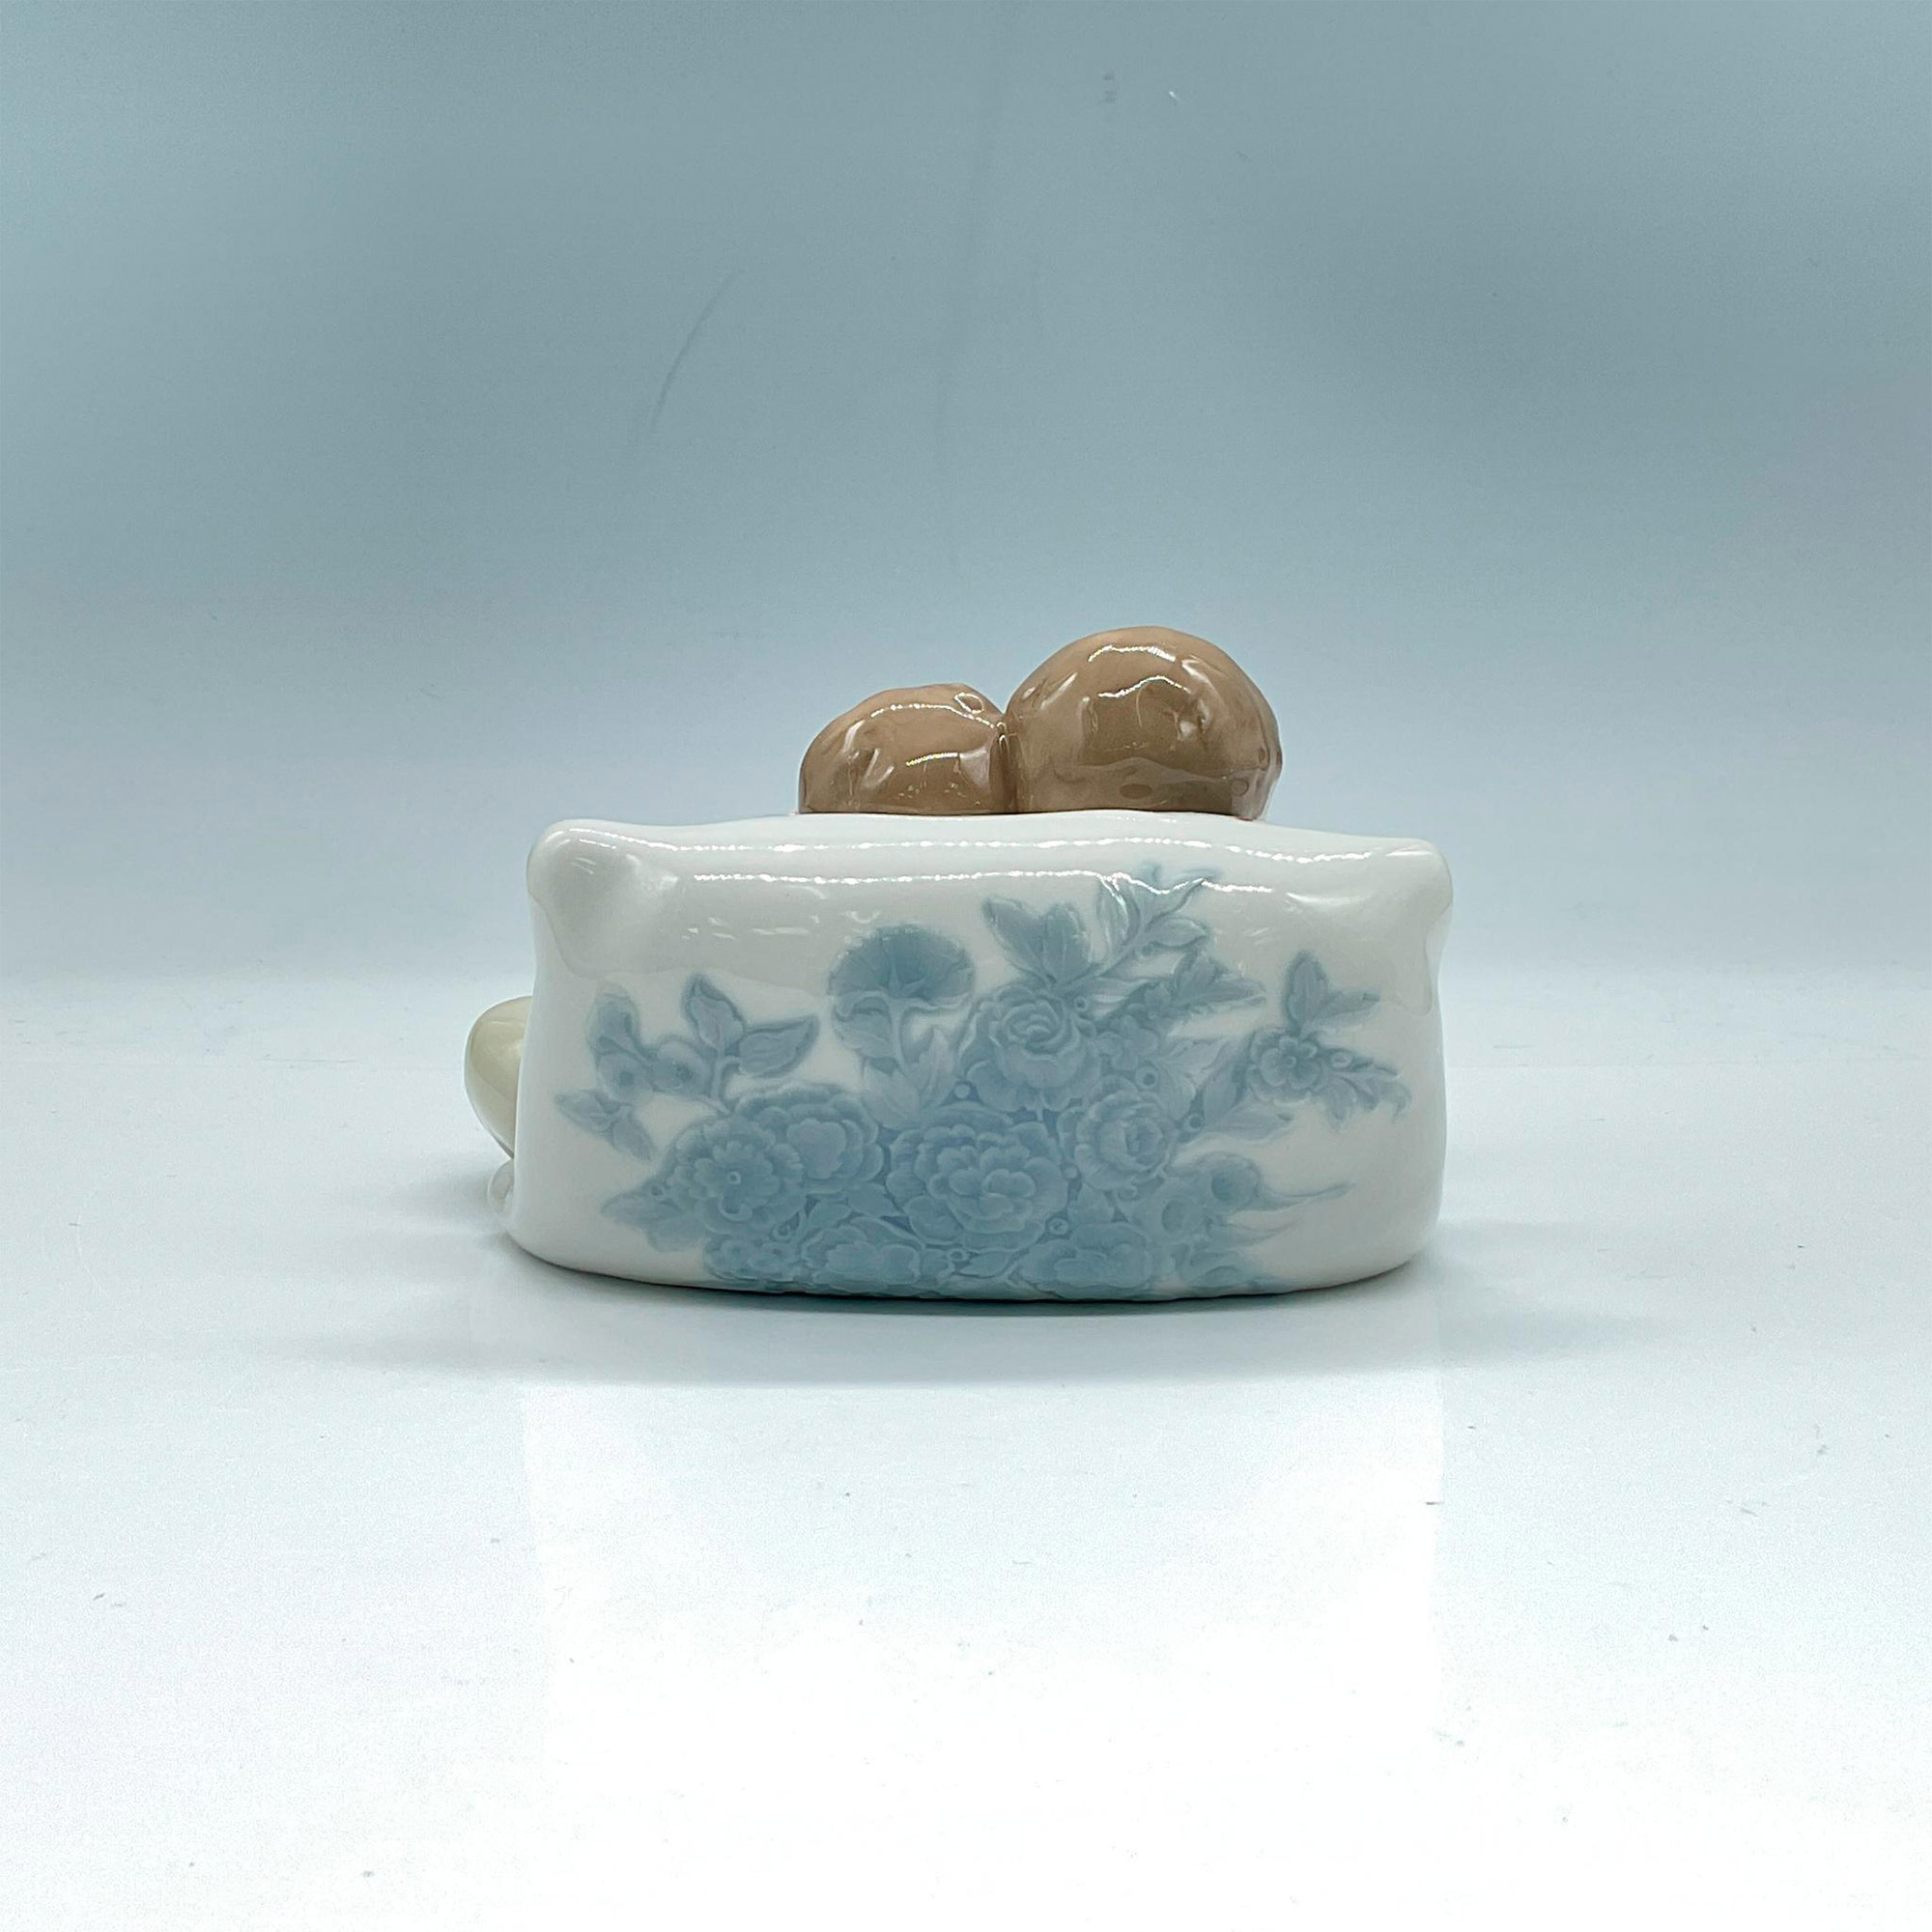 Little Dreamers 1005772 - Lladro Porcelain Figurine - Image 2 of 3